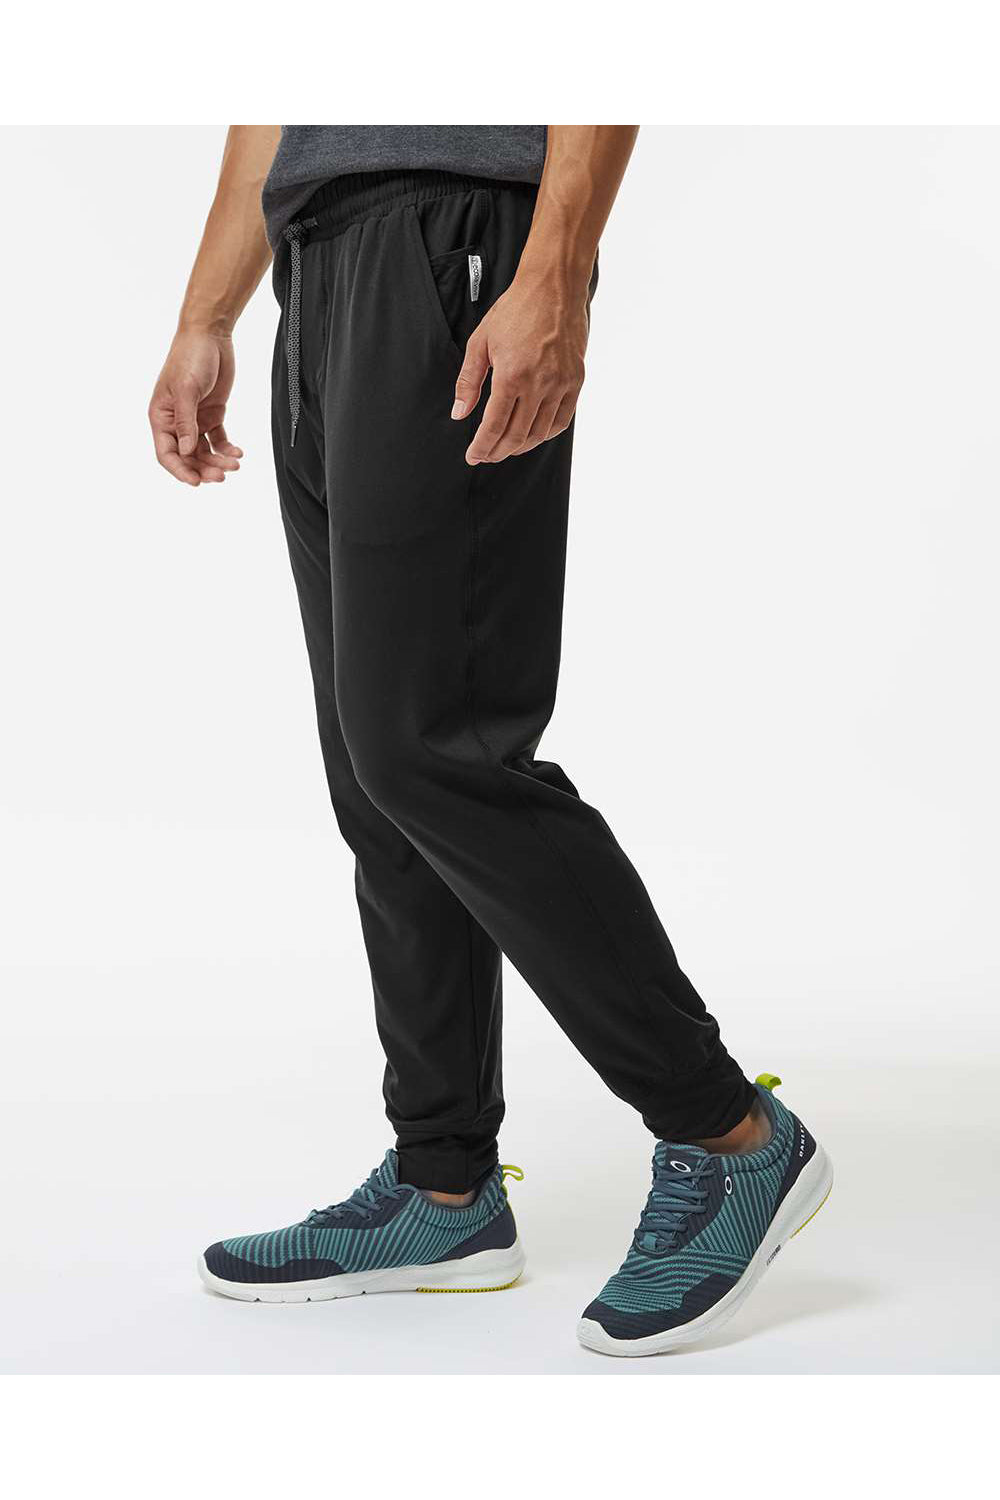 Holloway 222599 Mens Eco Revive Ventura Jogger Sweatpants w/ Pockets Black Model Side